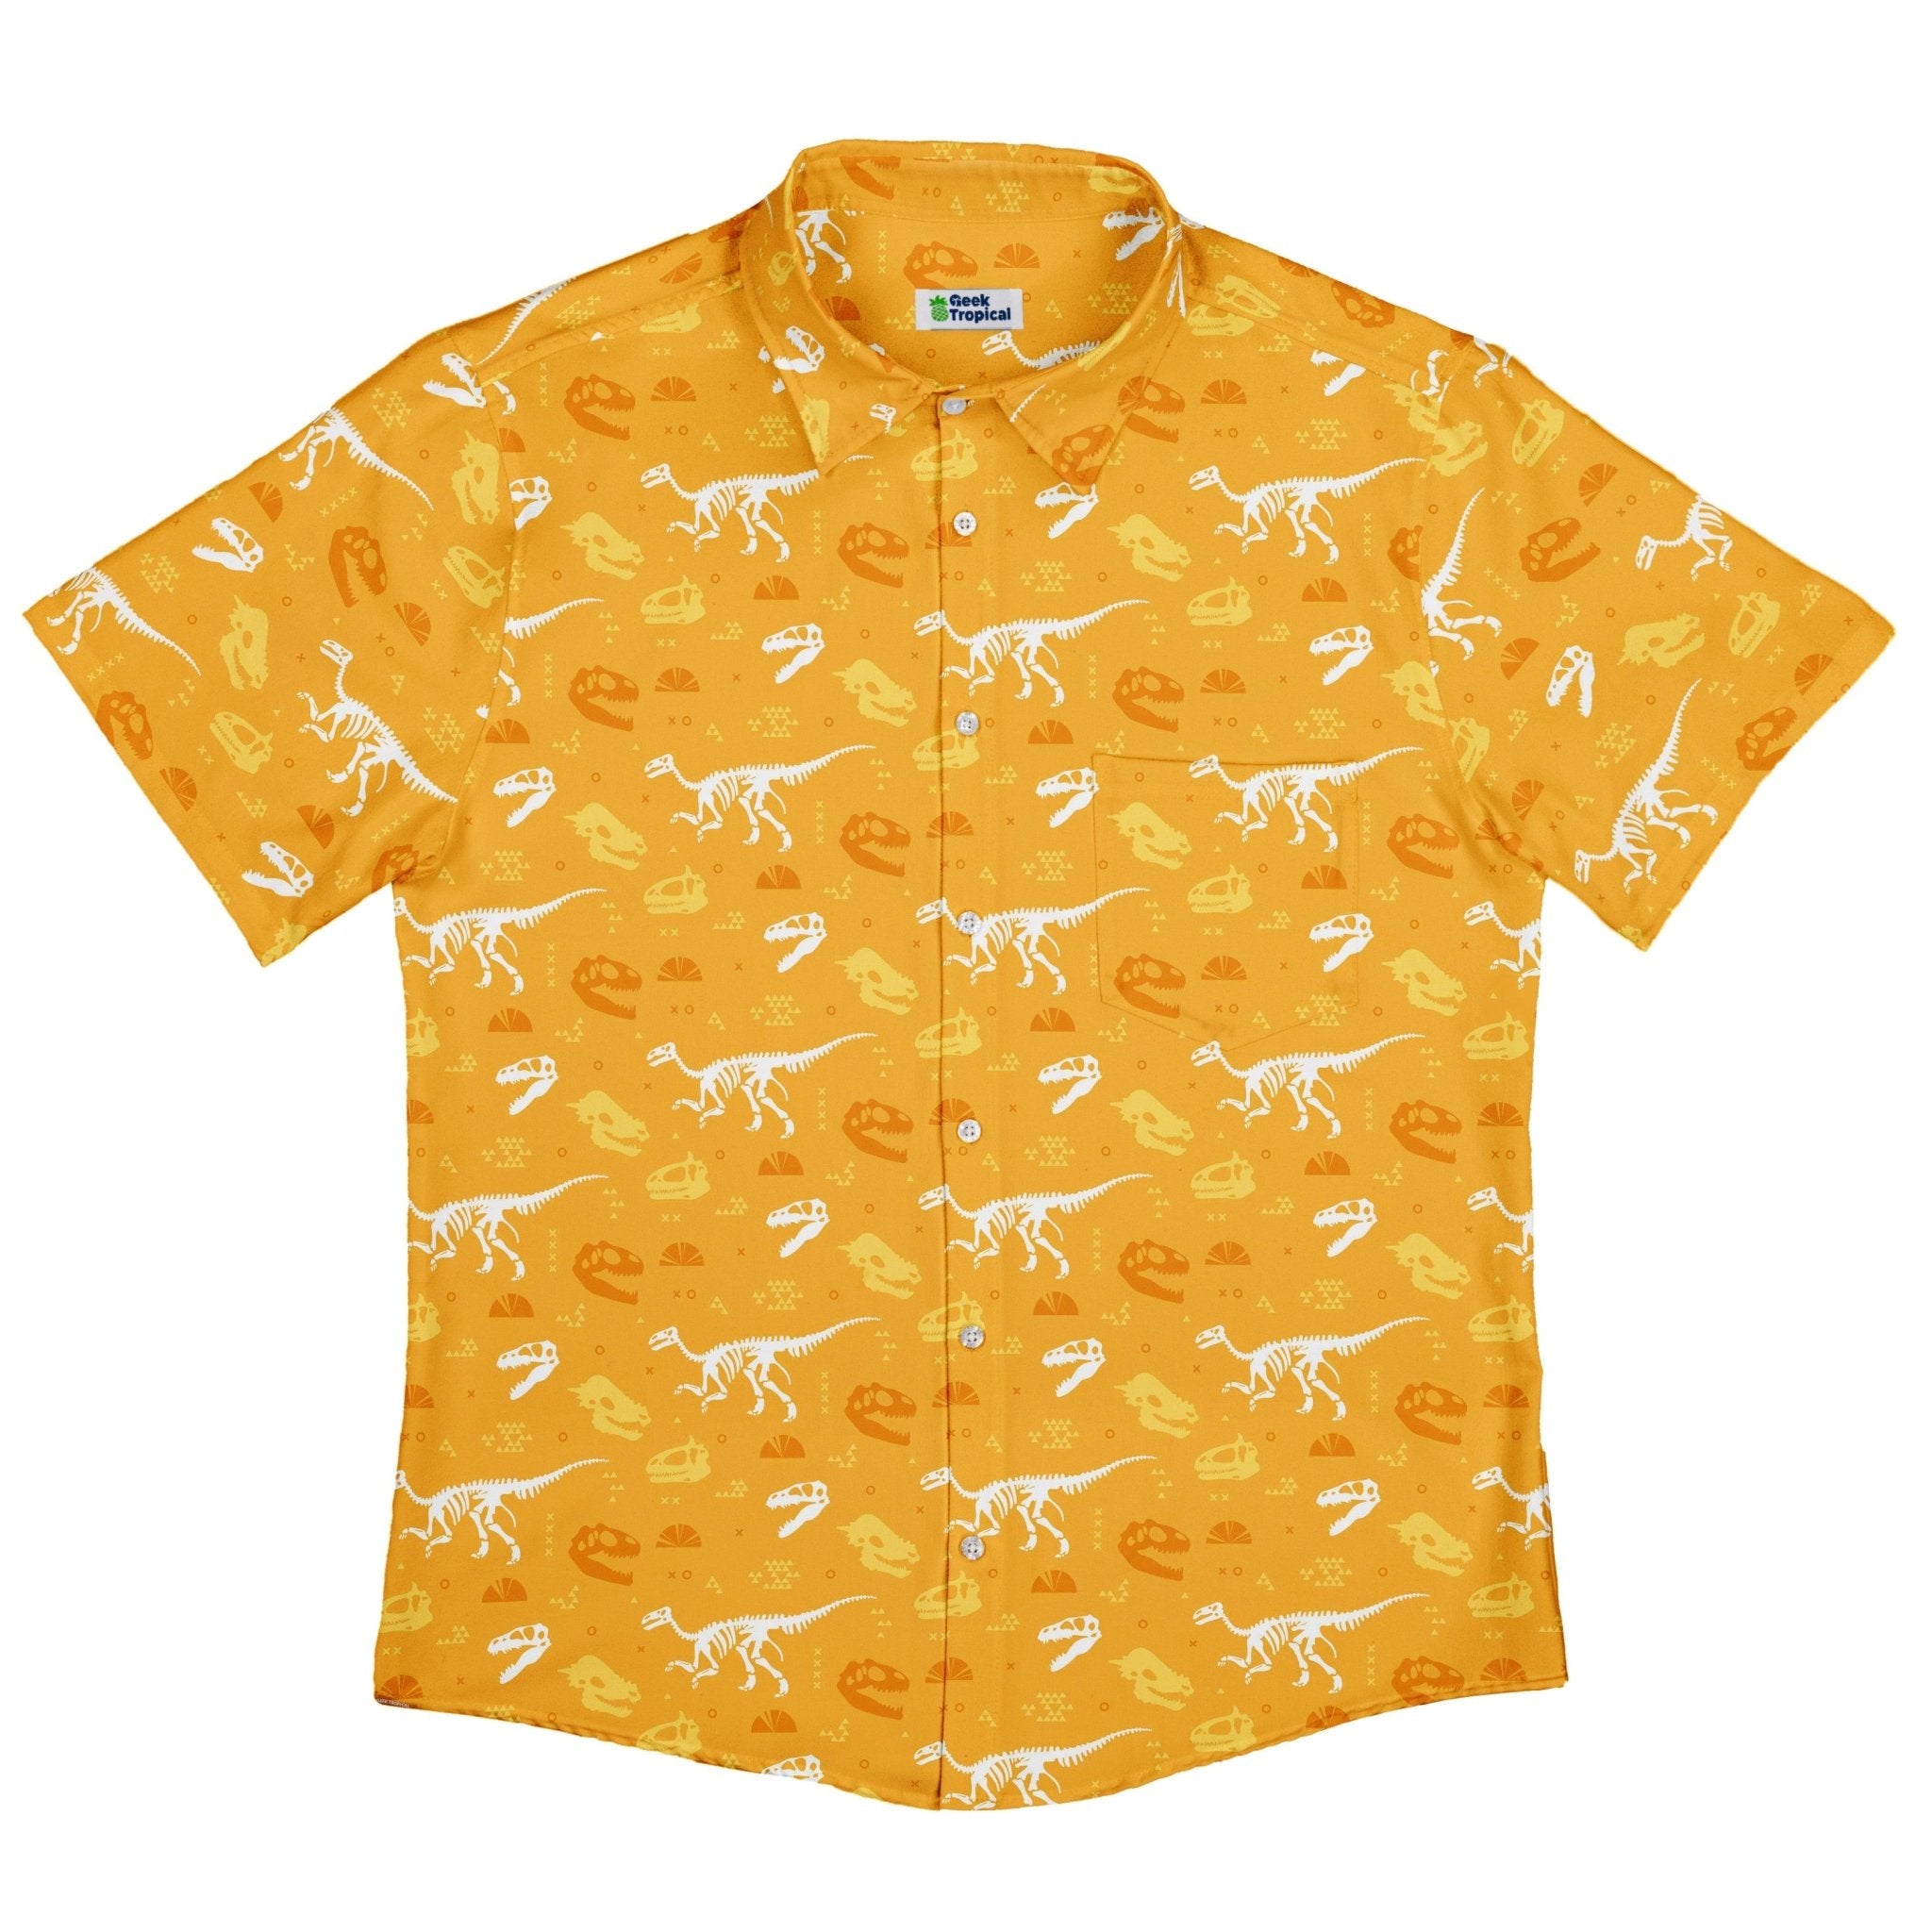 Orange Dinosaur Bones Button Up Shirt - adult sizing - dinosaur print -